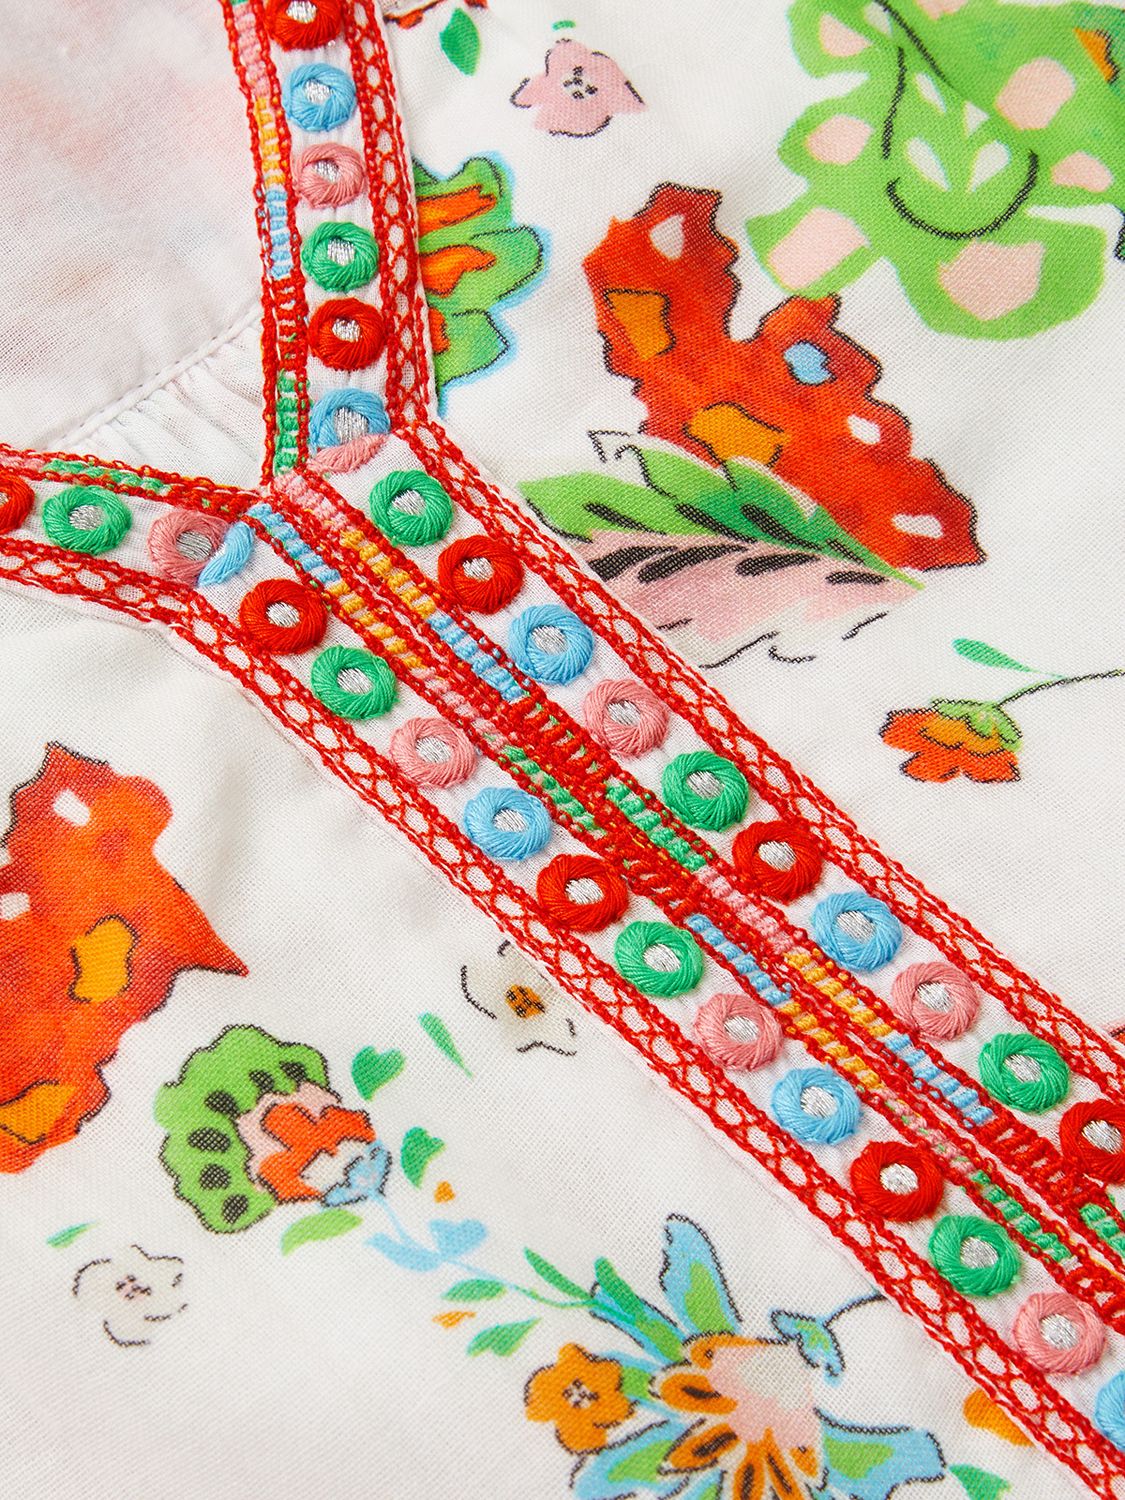 Monsoon Kids' Mini Me Floral Border Kaftan Dress, Ivory/Multi, 3-4 years